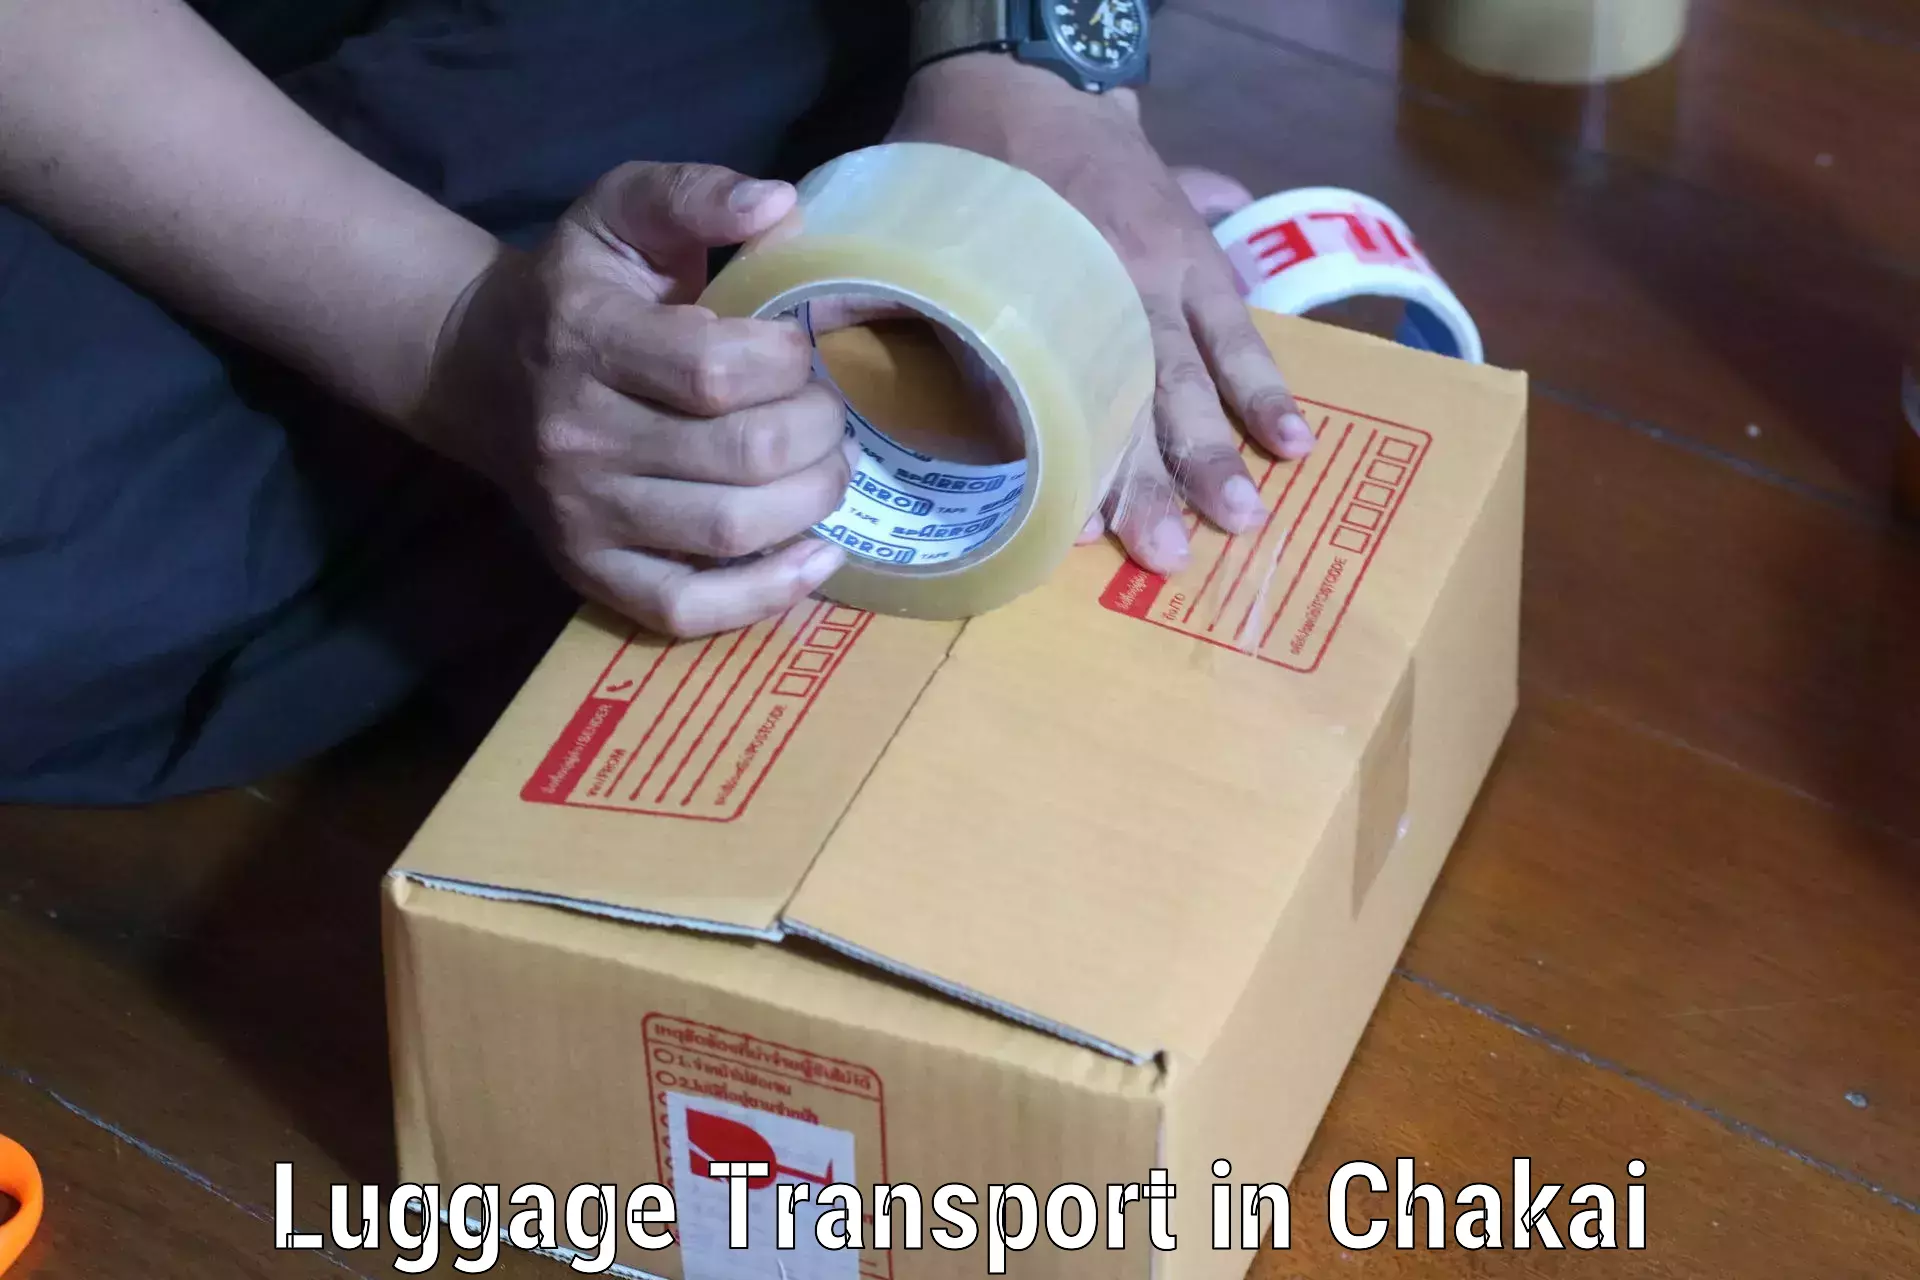 Luggage transit service in Chakai